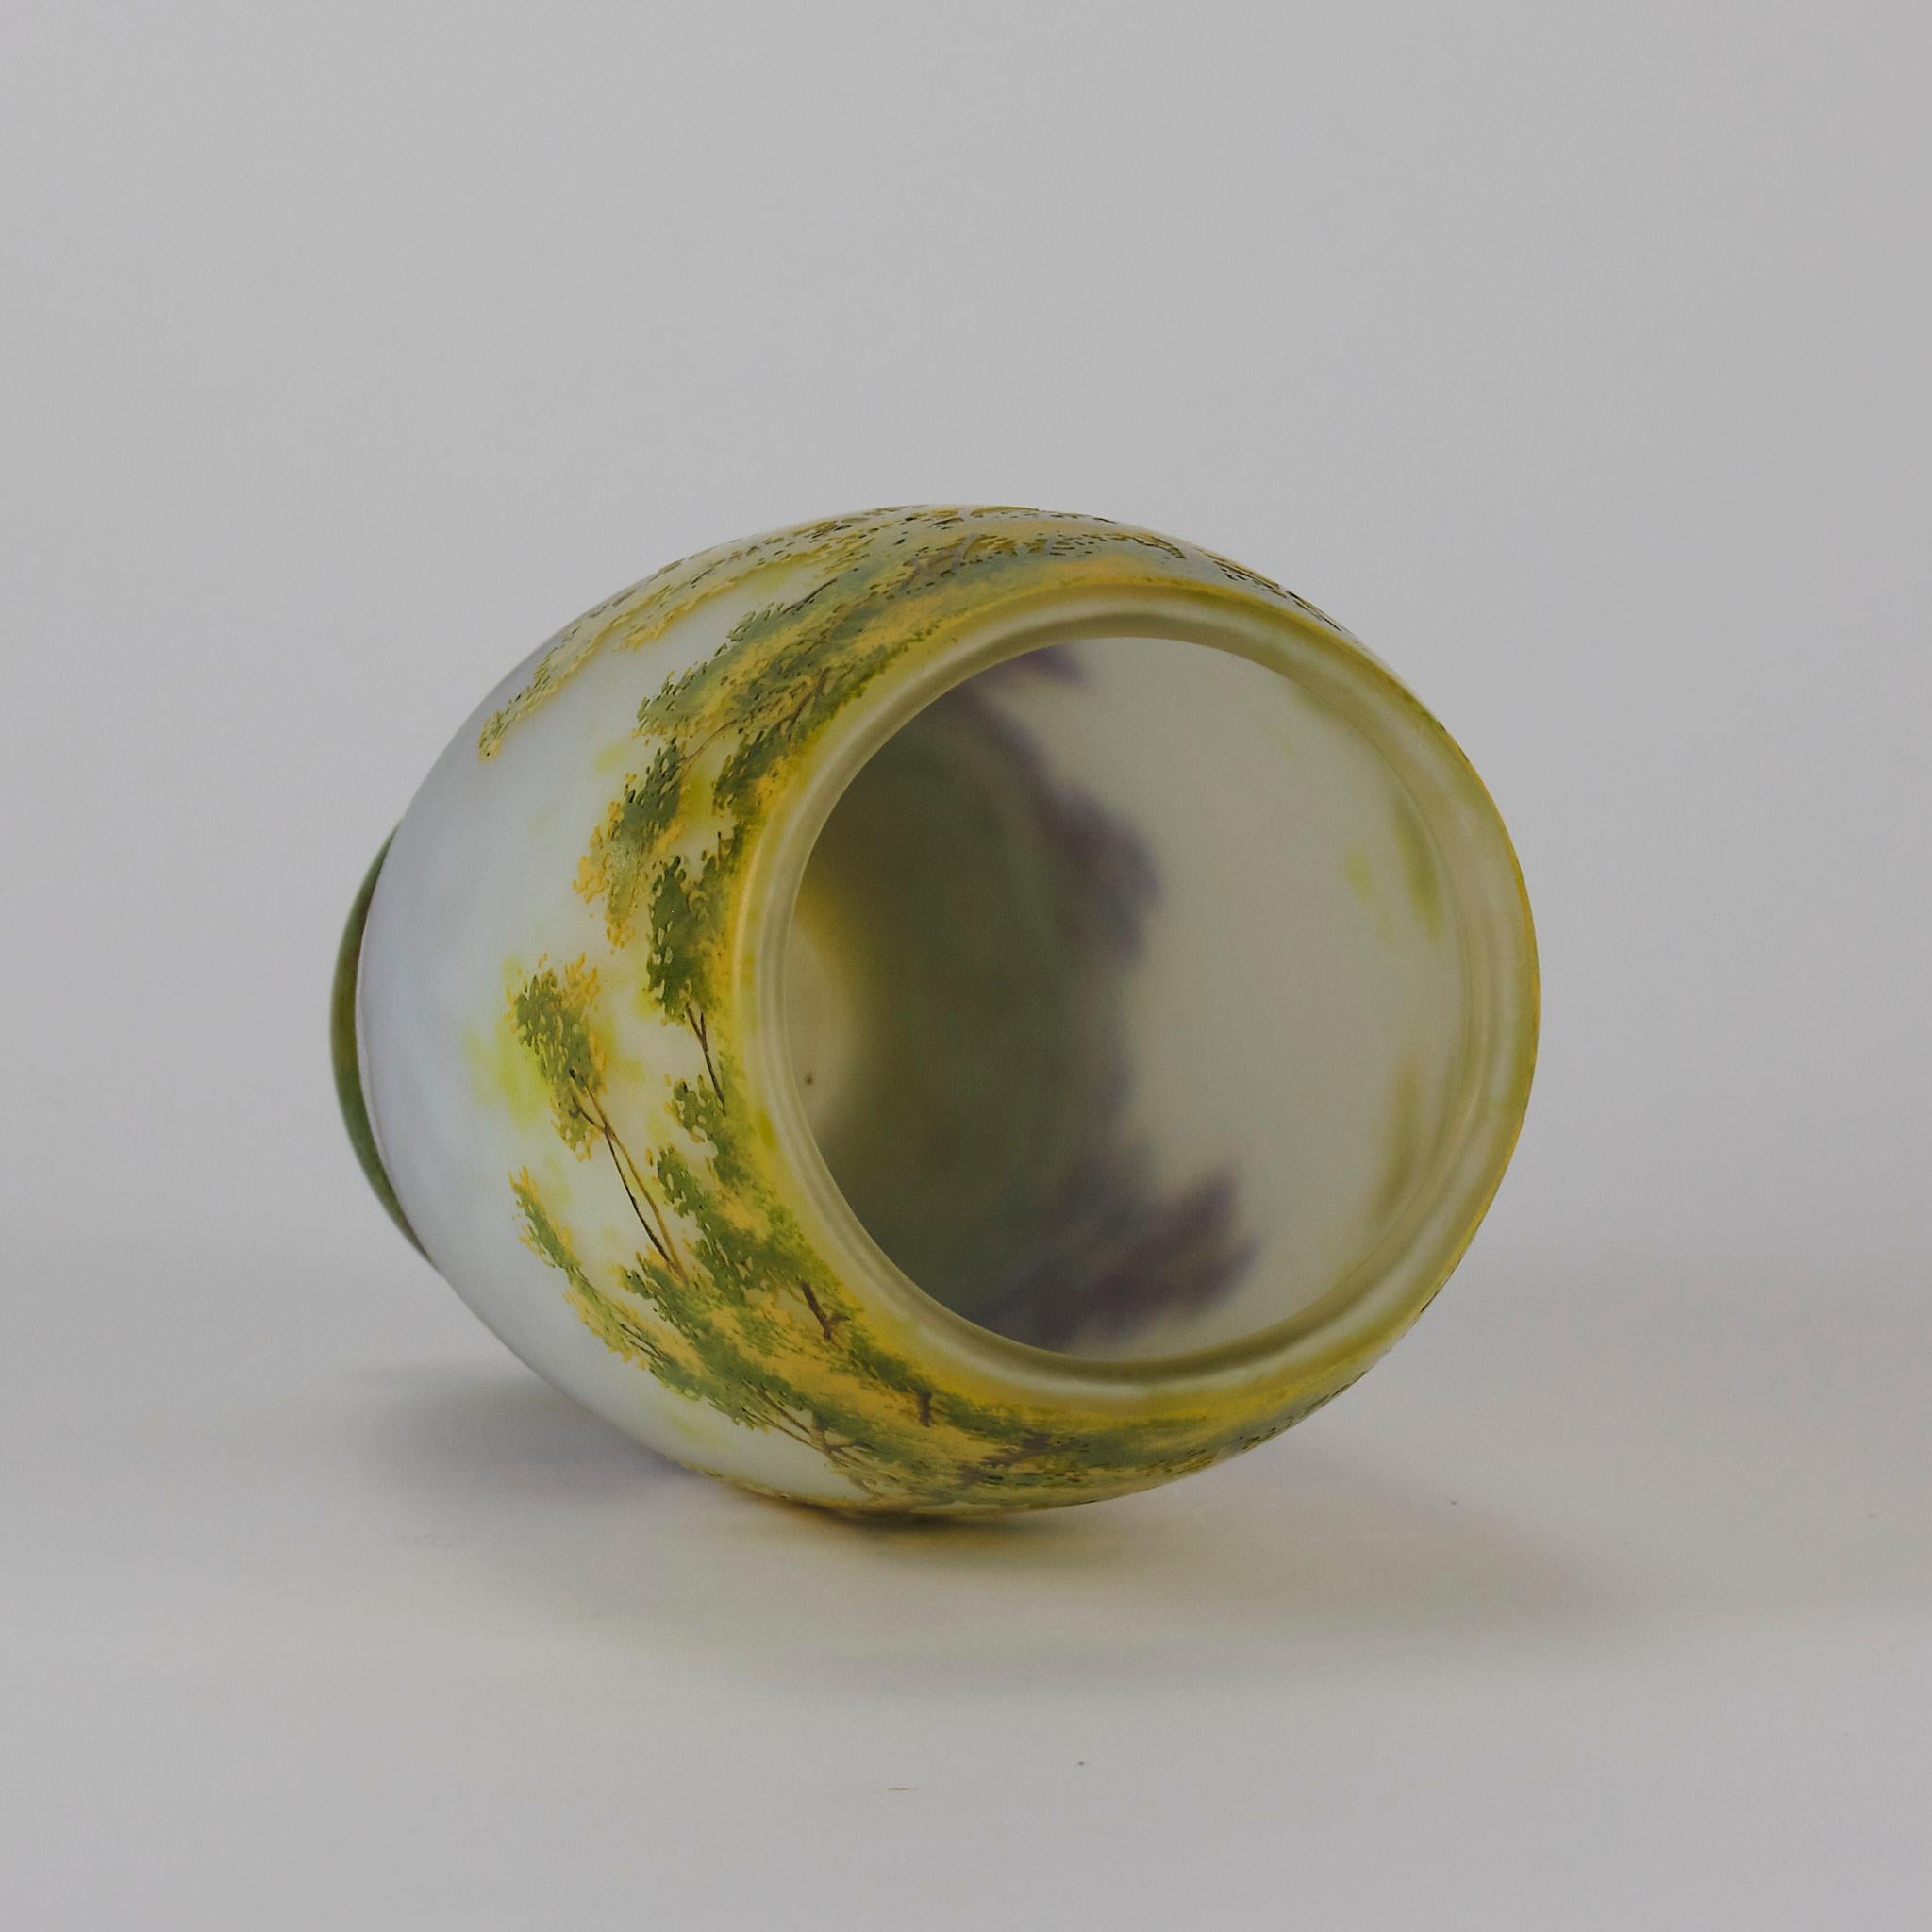 20th Century Cameo Glass Landscape Vase entitled 